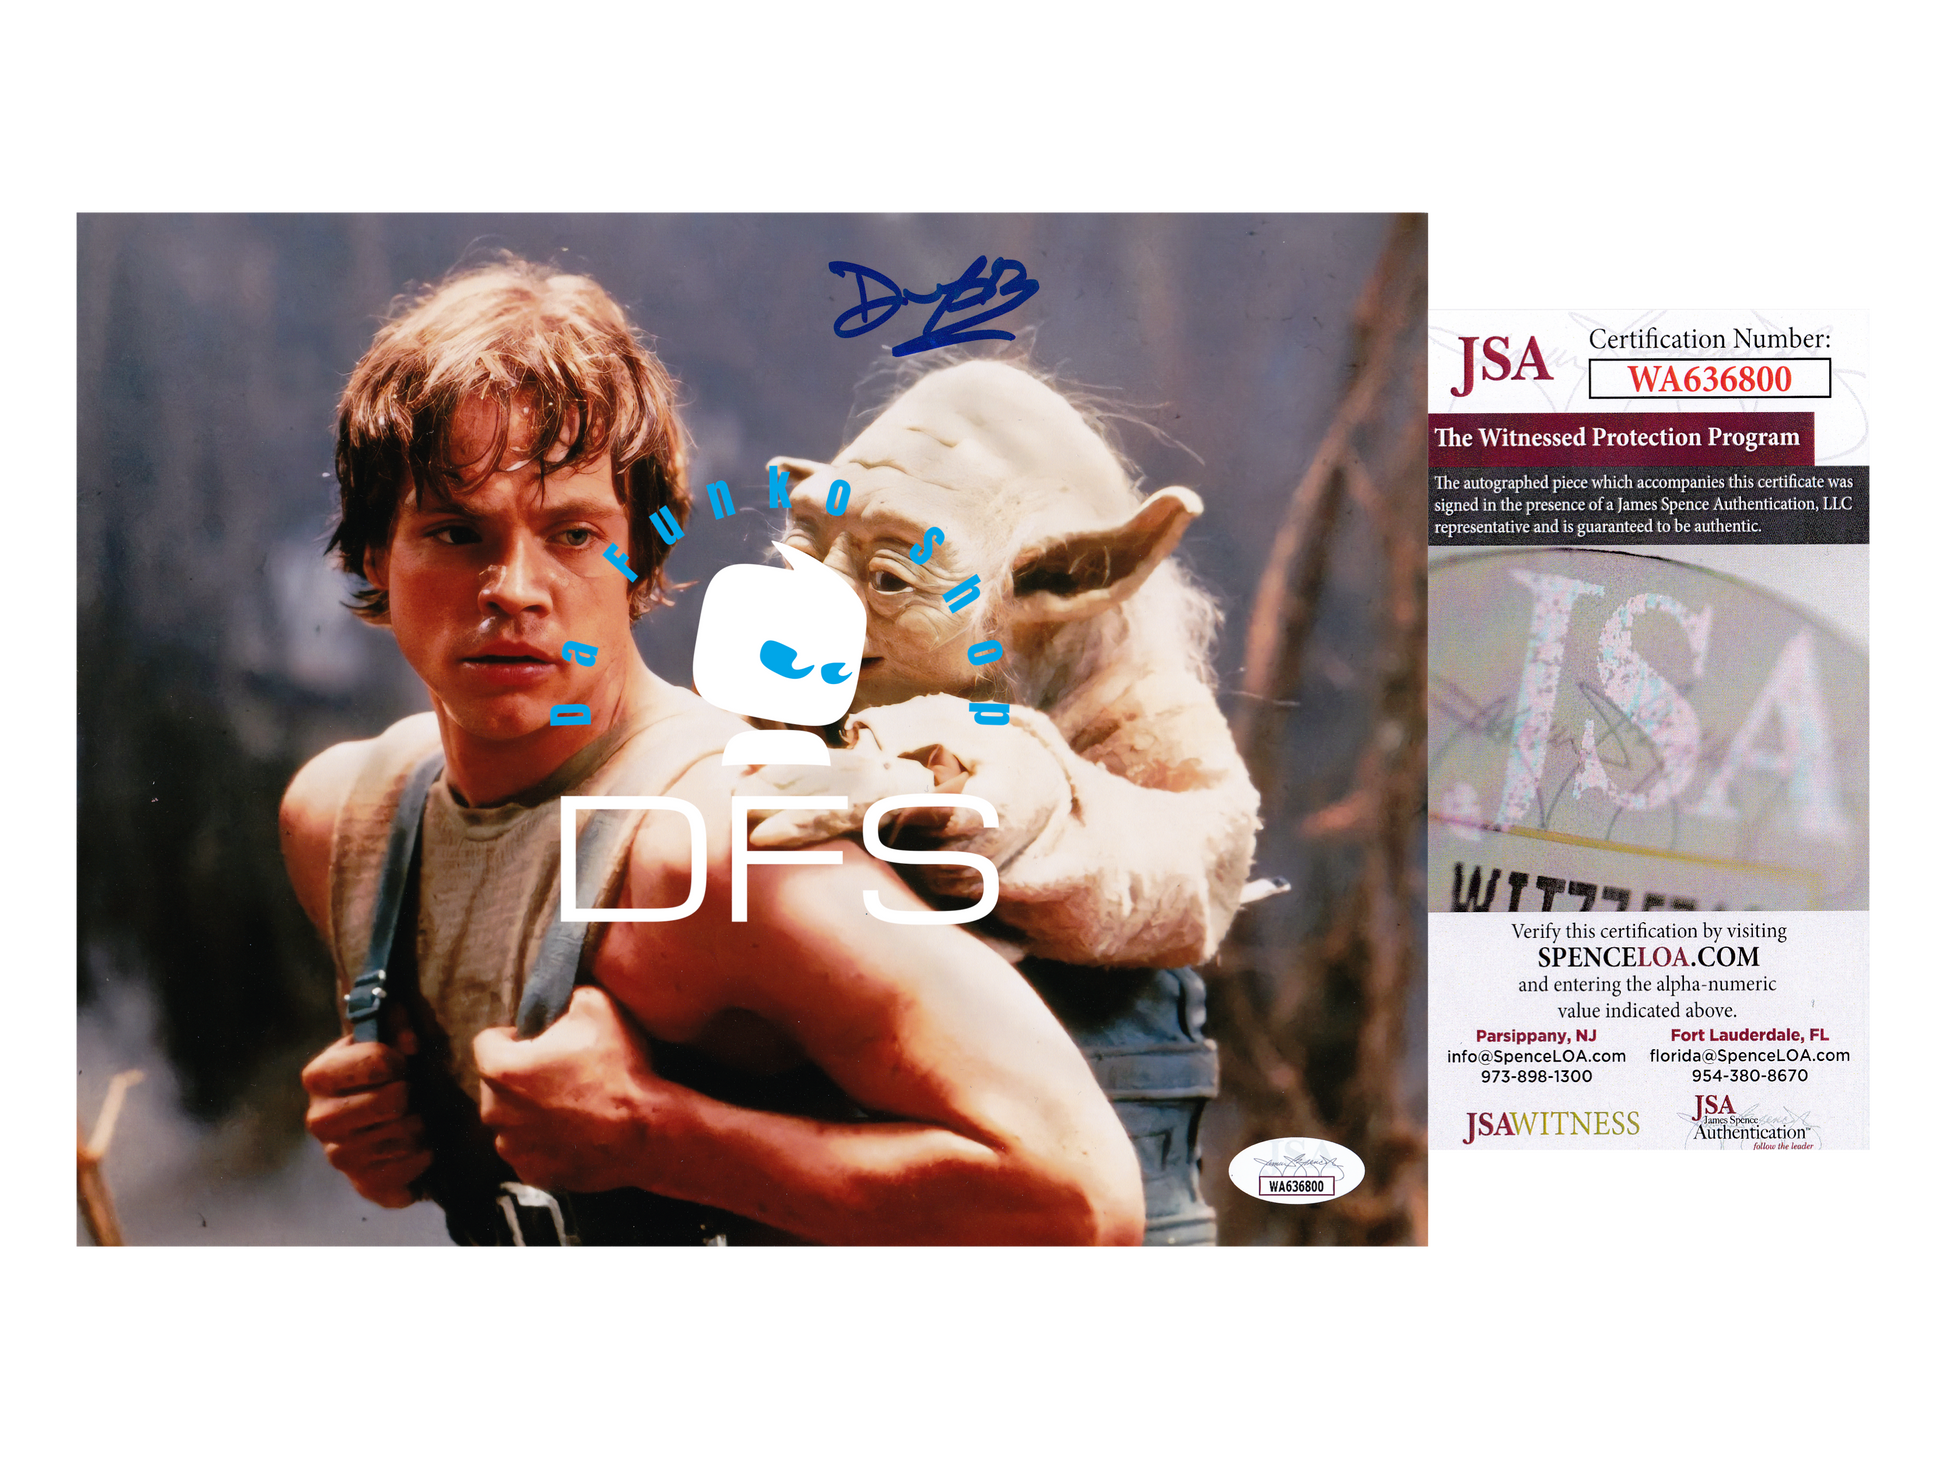 Deep Roy Autograph Signed Star Wars Yoda 8x10 Photo inscribed Yoda - JSA - DaFunkoShop - Autographed memorabilia.